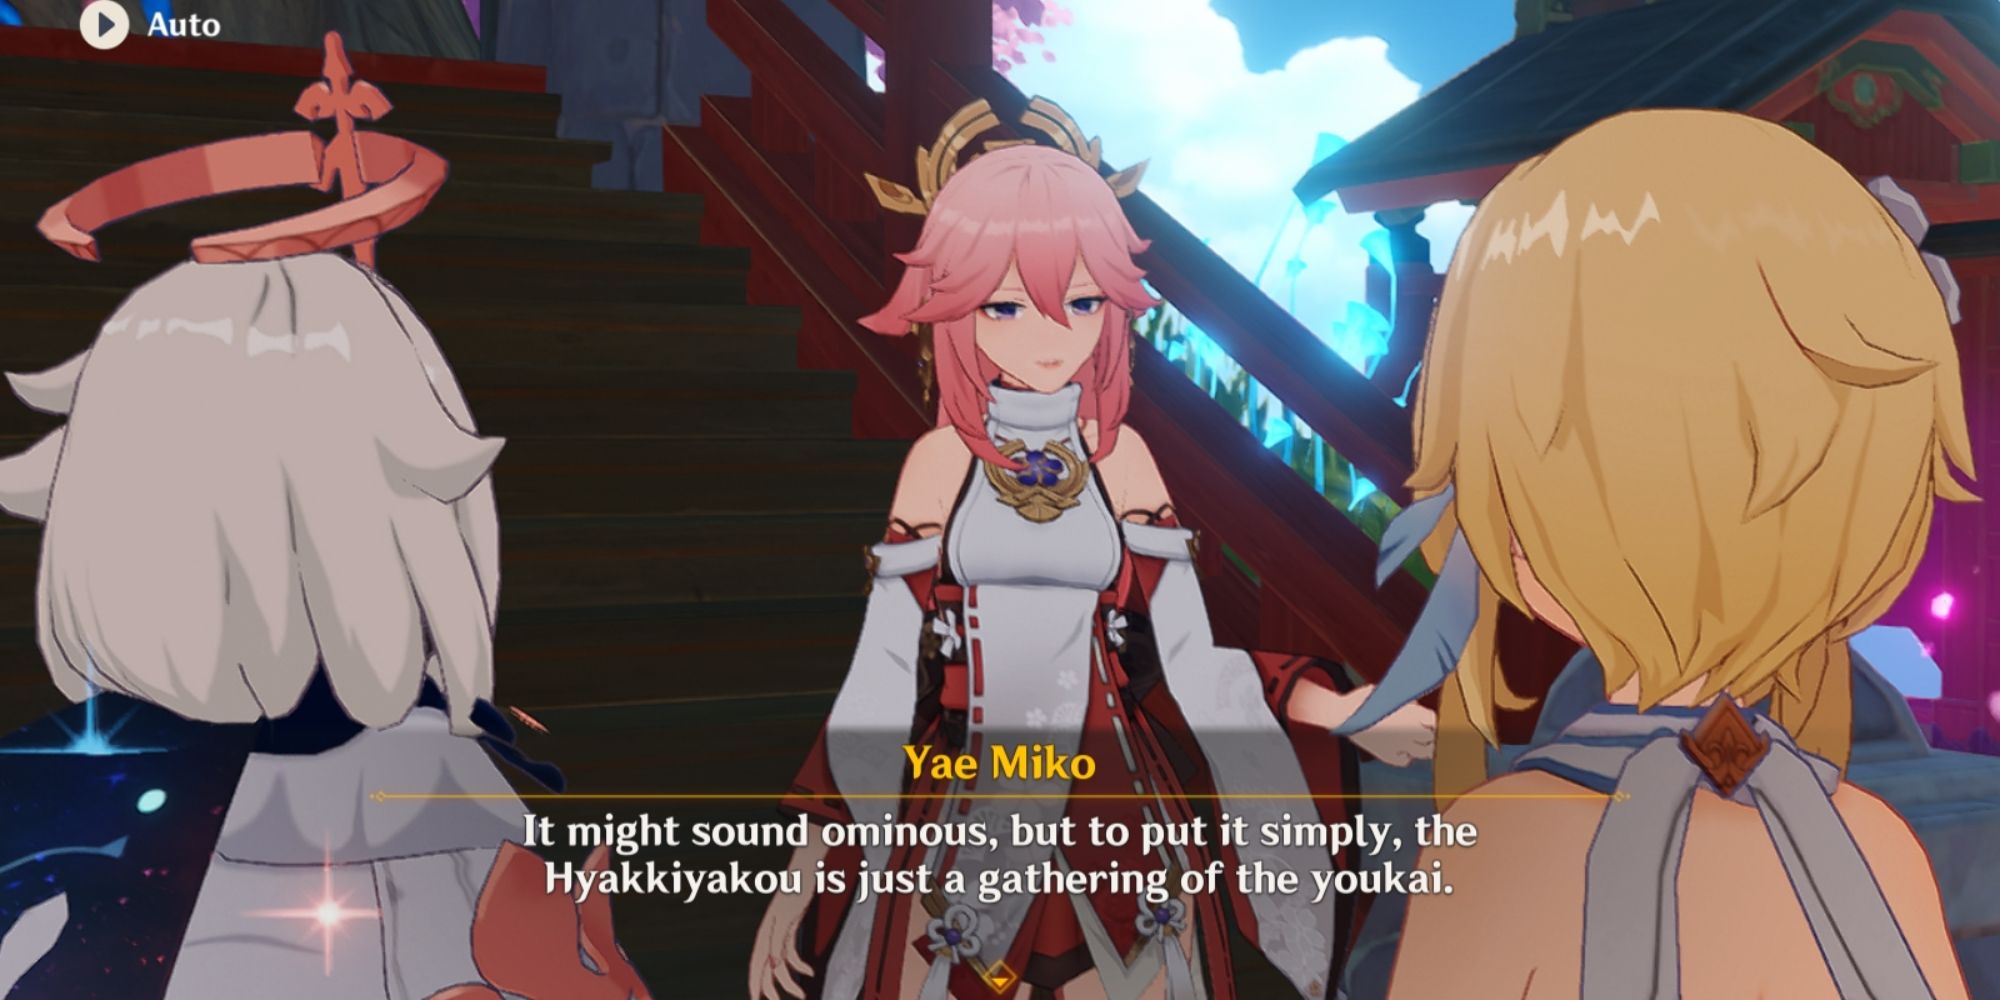 Yae Miko explaining Hyakkiyakou